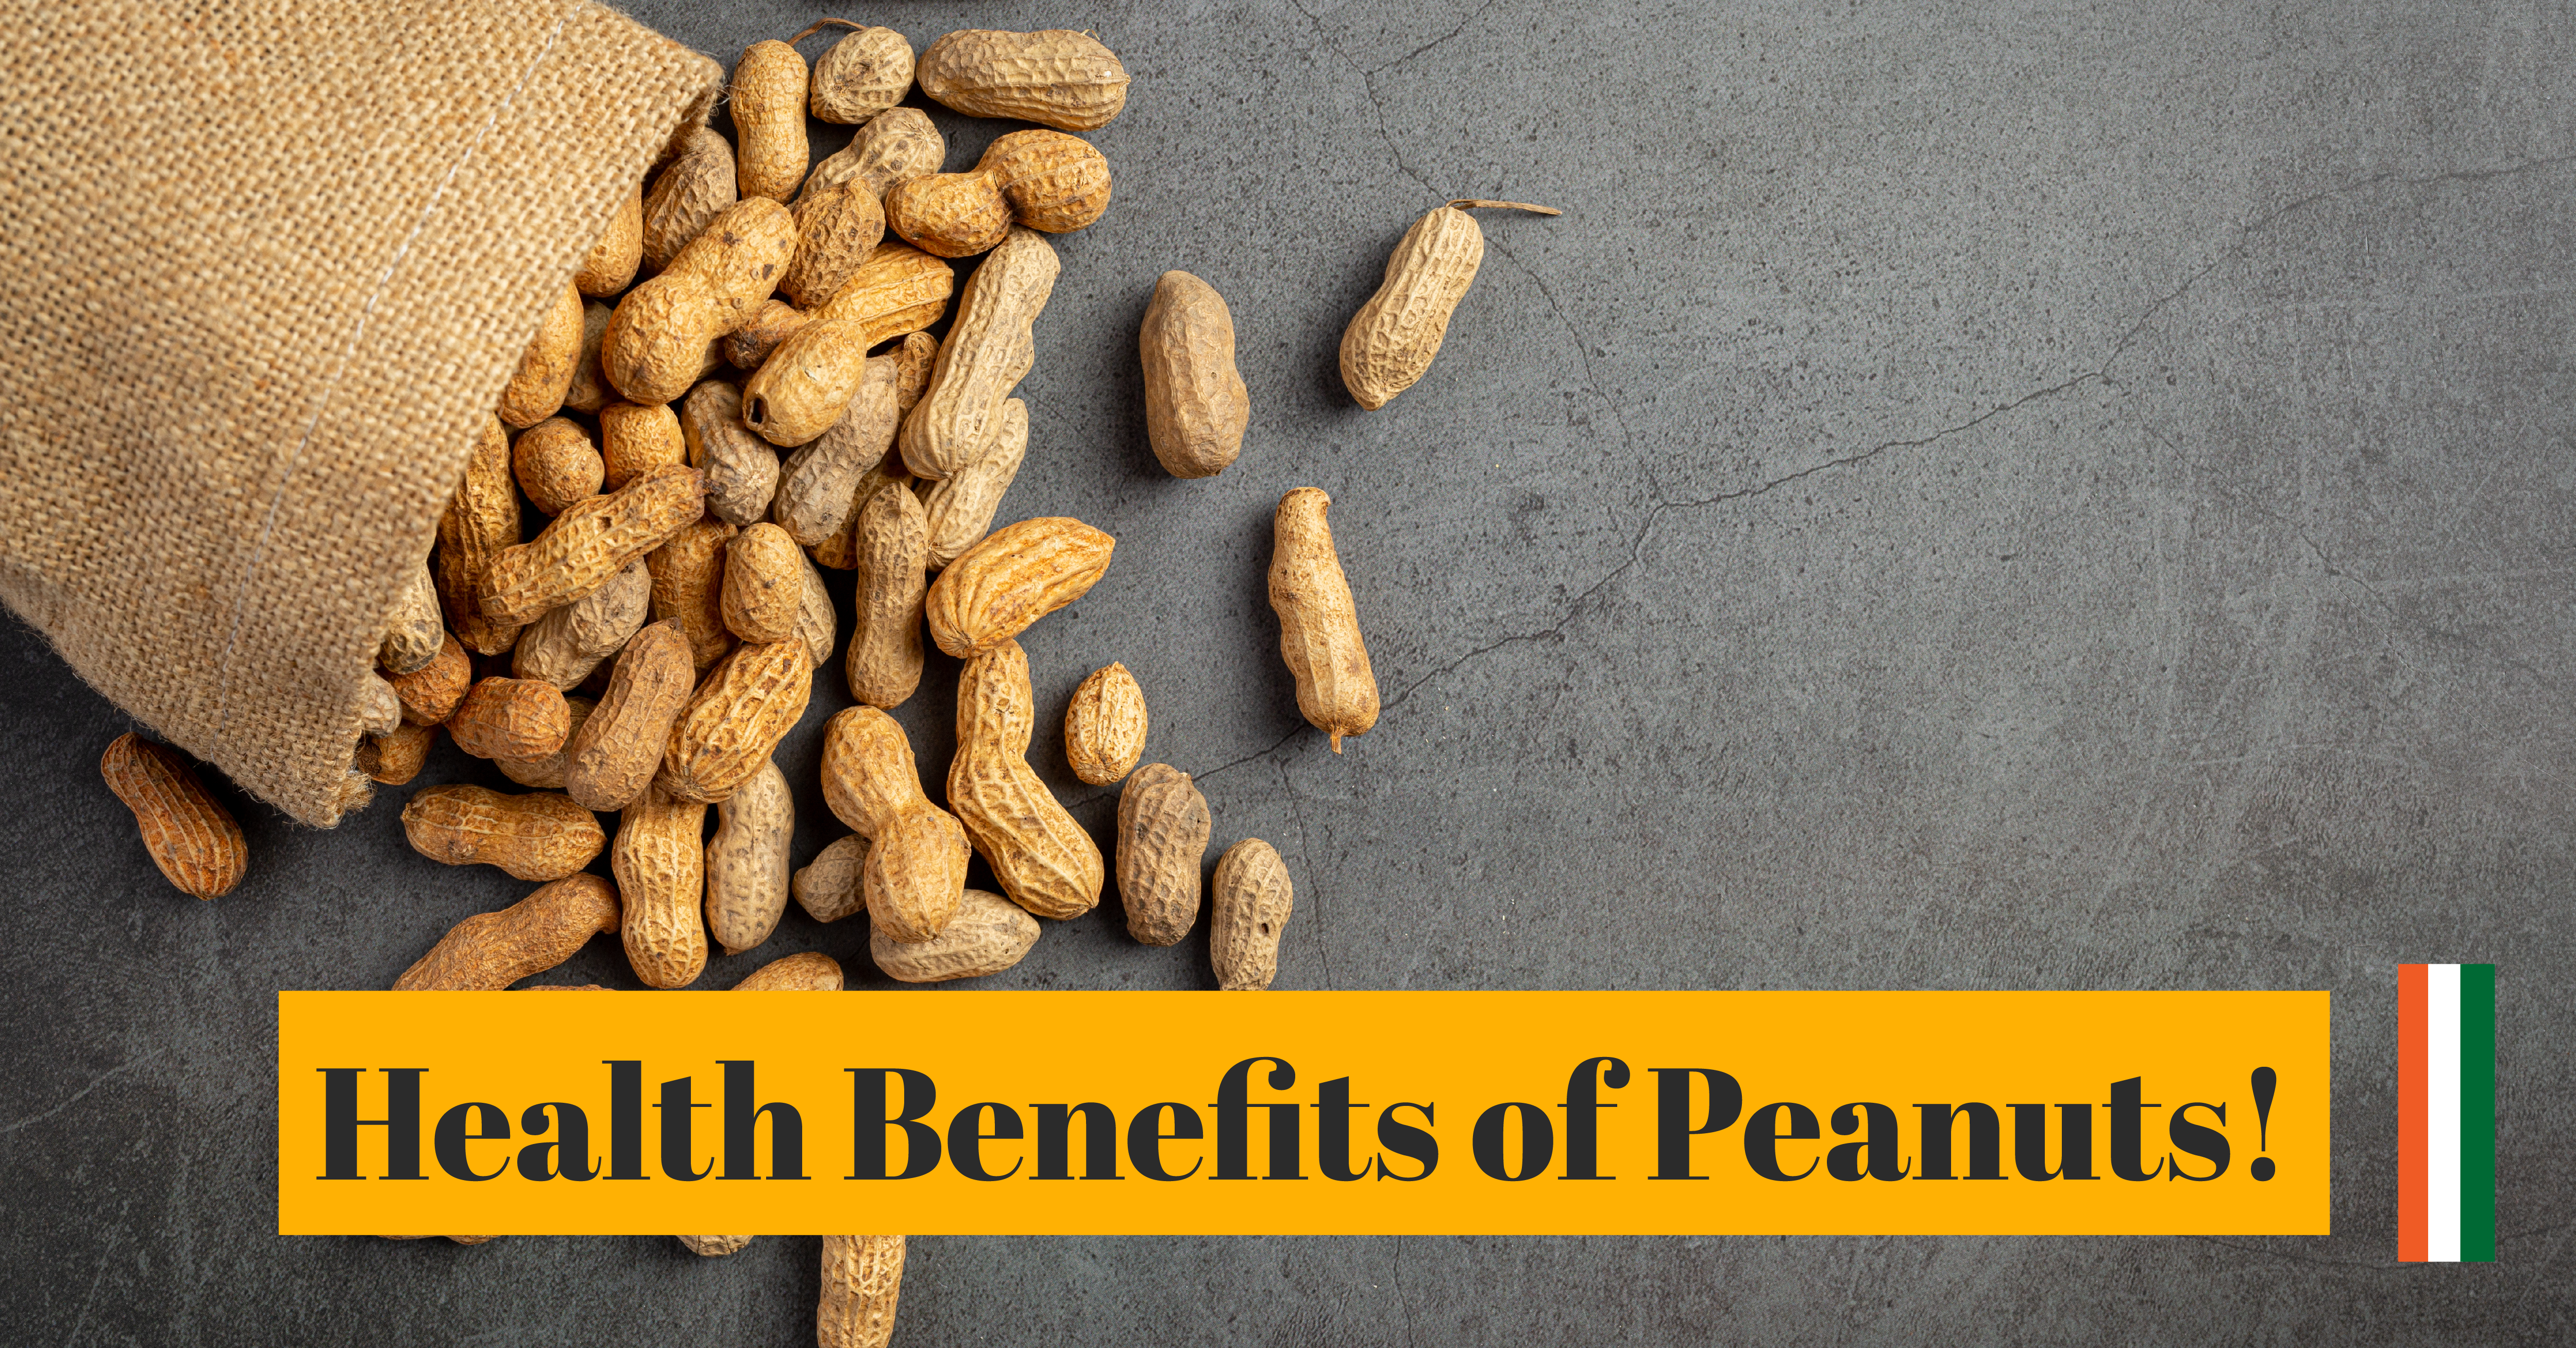 Health Benefits of Peanuts!